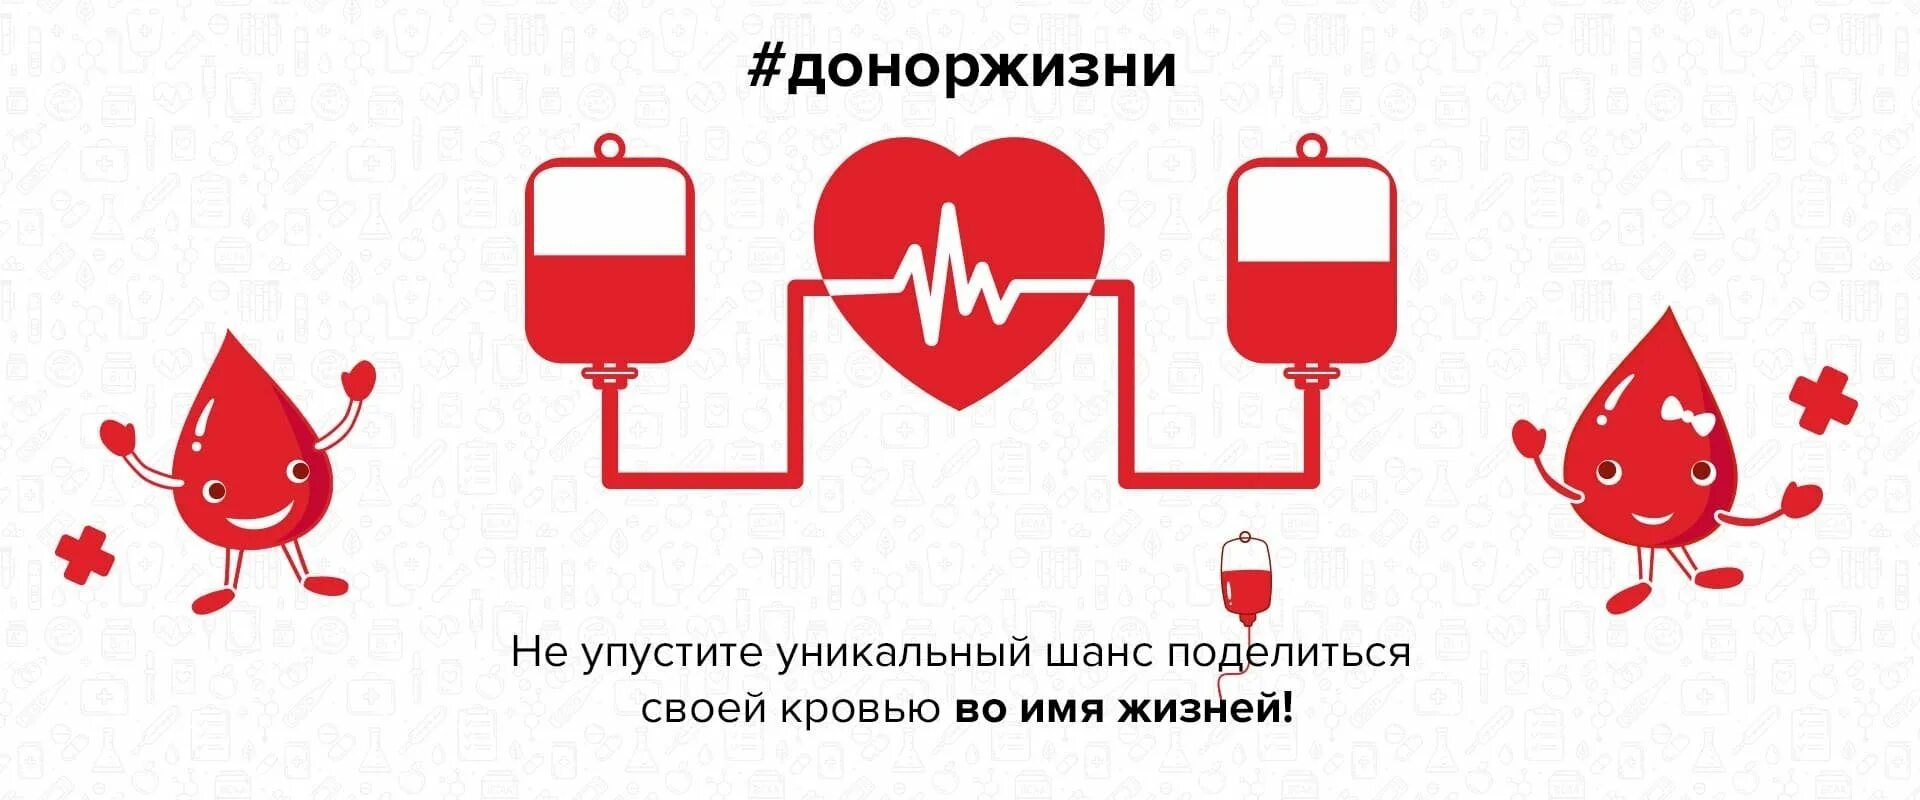 Донорство картинки. Донорство крови плакат. Донорство рисунок. Донорство крови рисунок. Донор информации